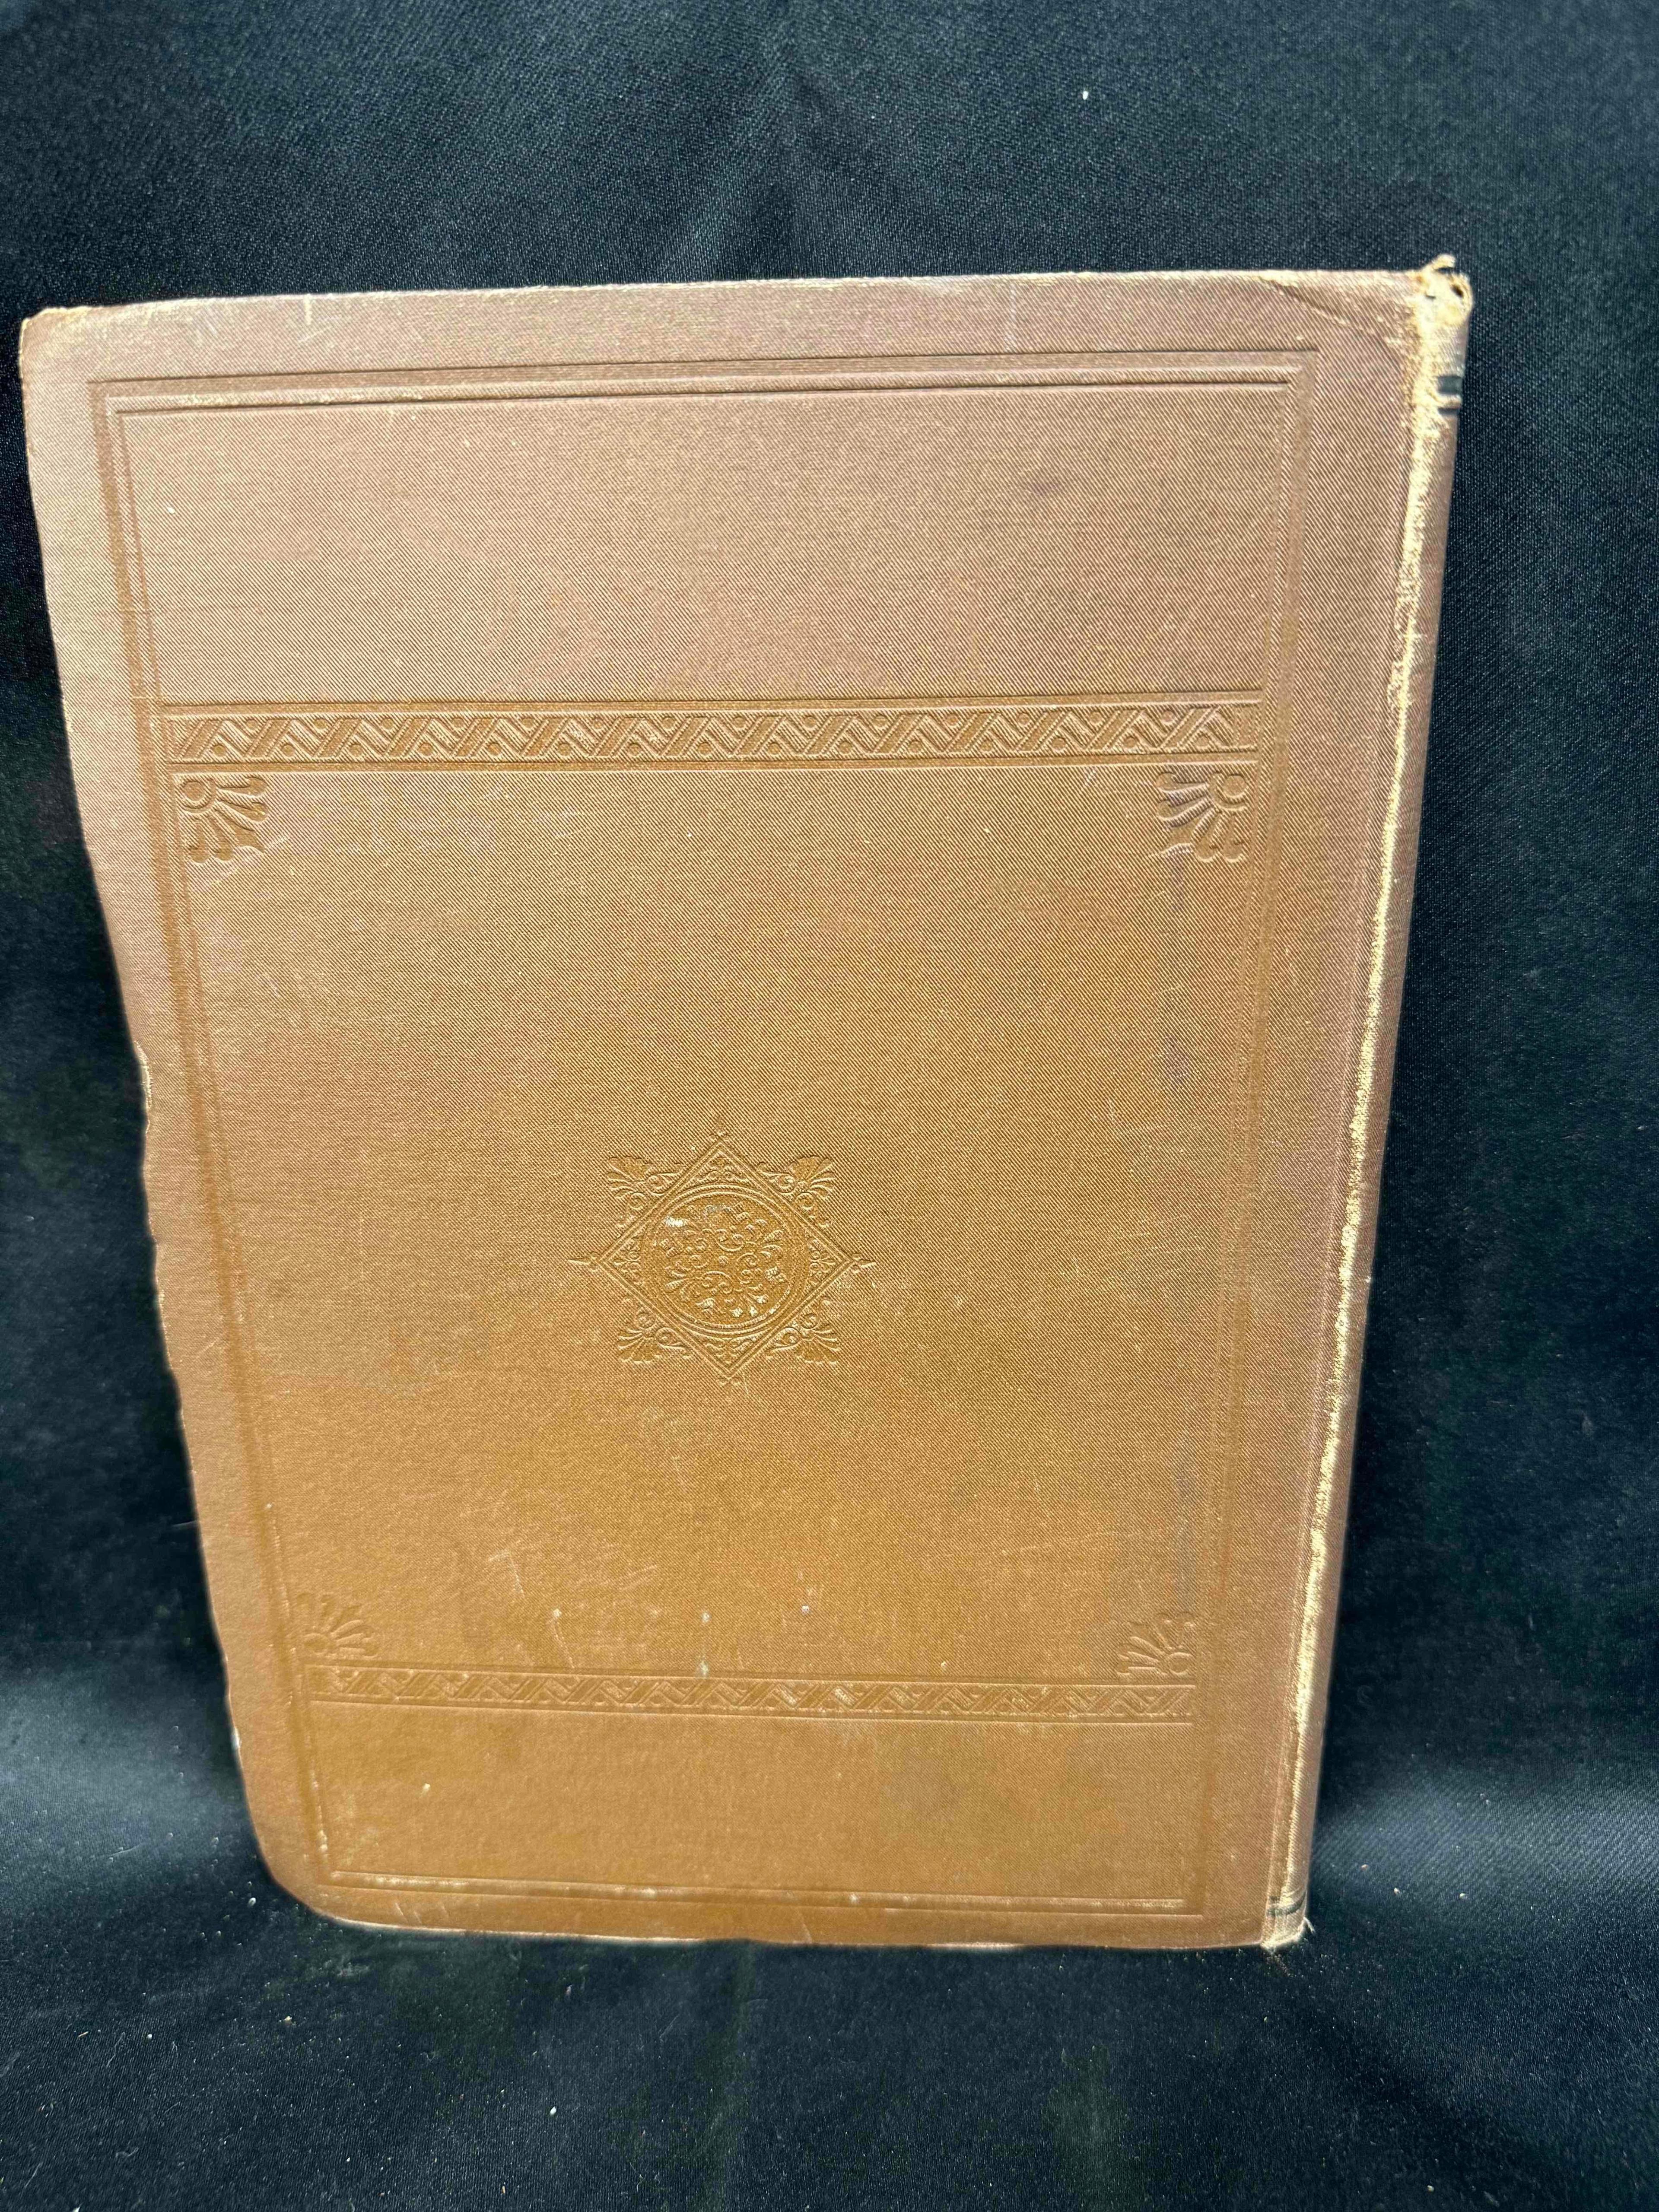 Antique Book Raffael Und Michelangelo 1883 A. Springer E.A. Seemann